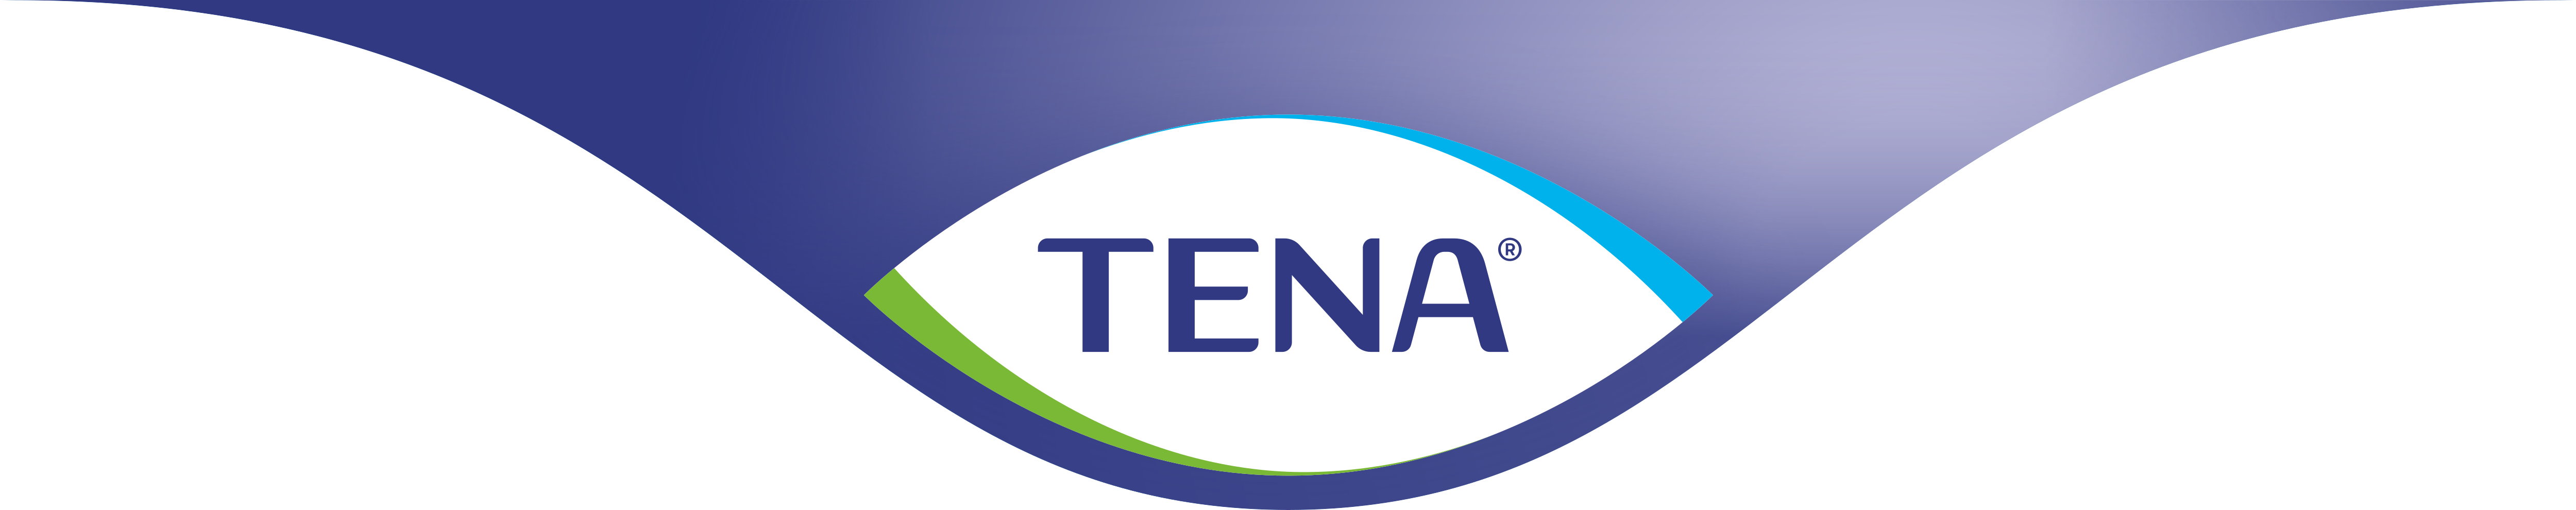 TENA_Logo.png